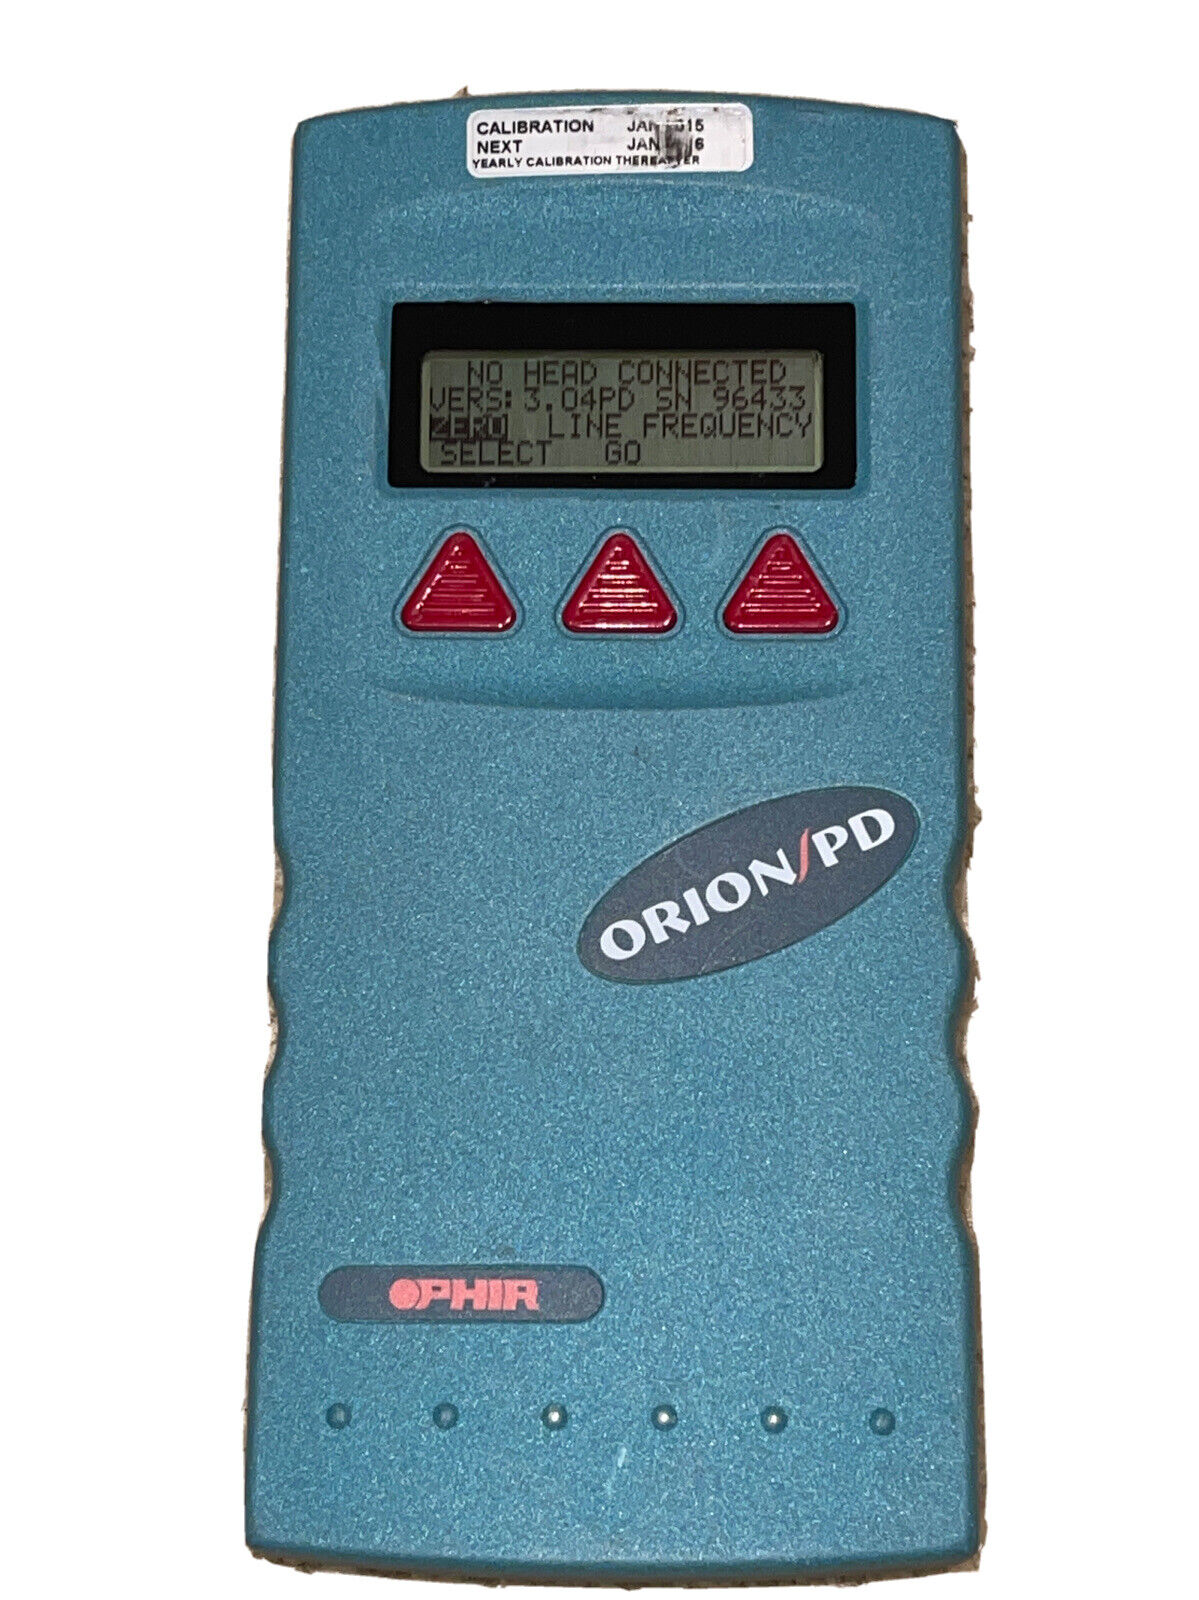 Ophir Orion Pd Display 1z01803 Optical Laser Power Meter 100% Working